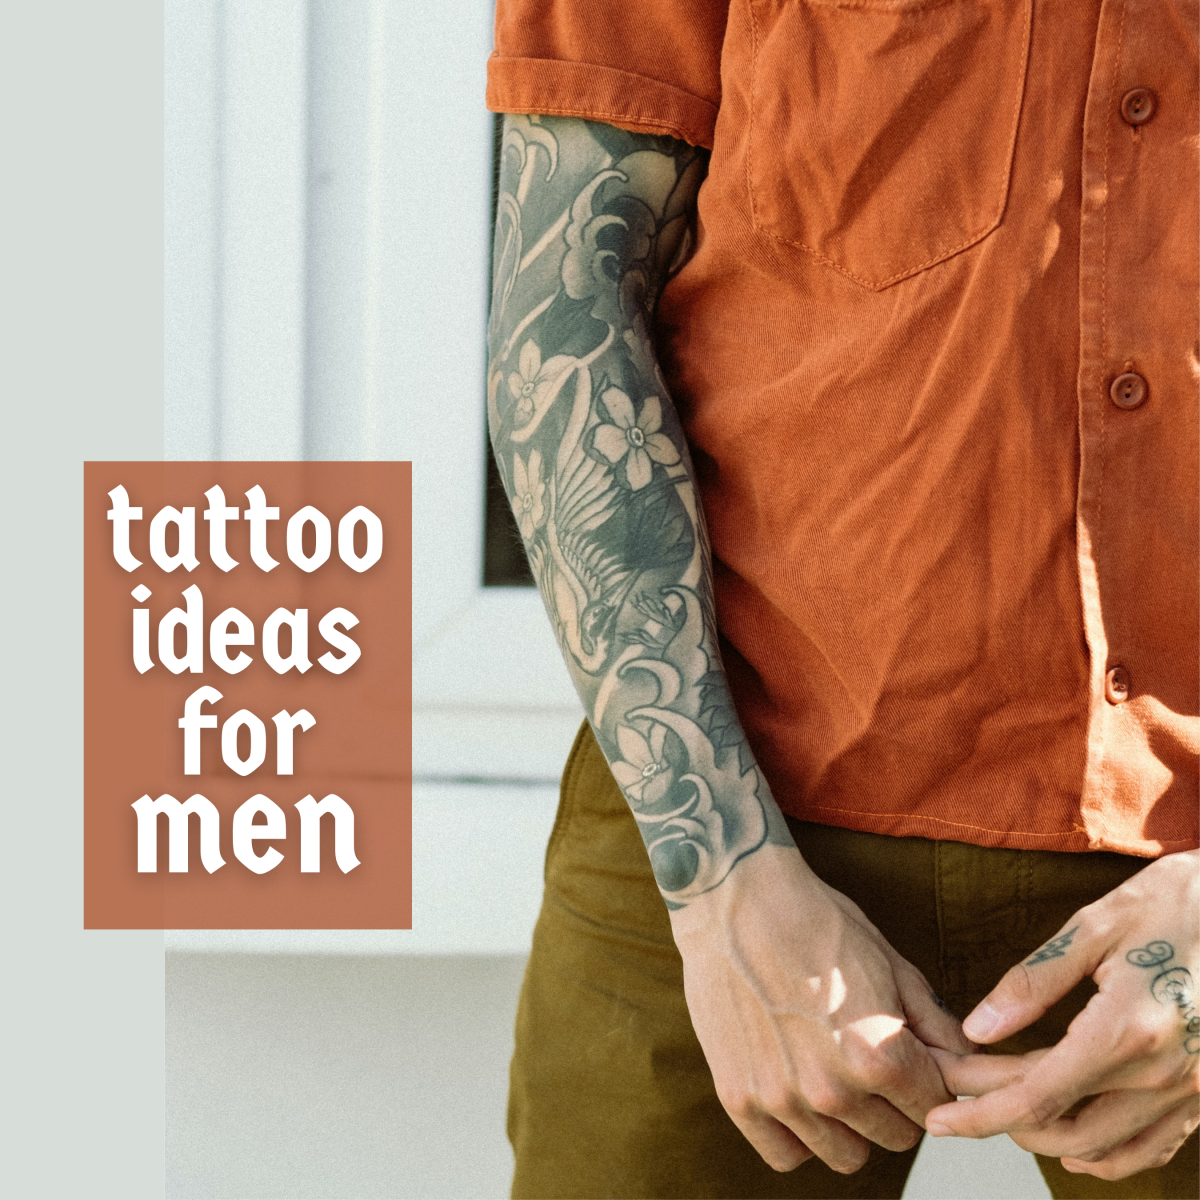 Tattoo ideas for men.